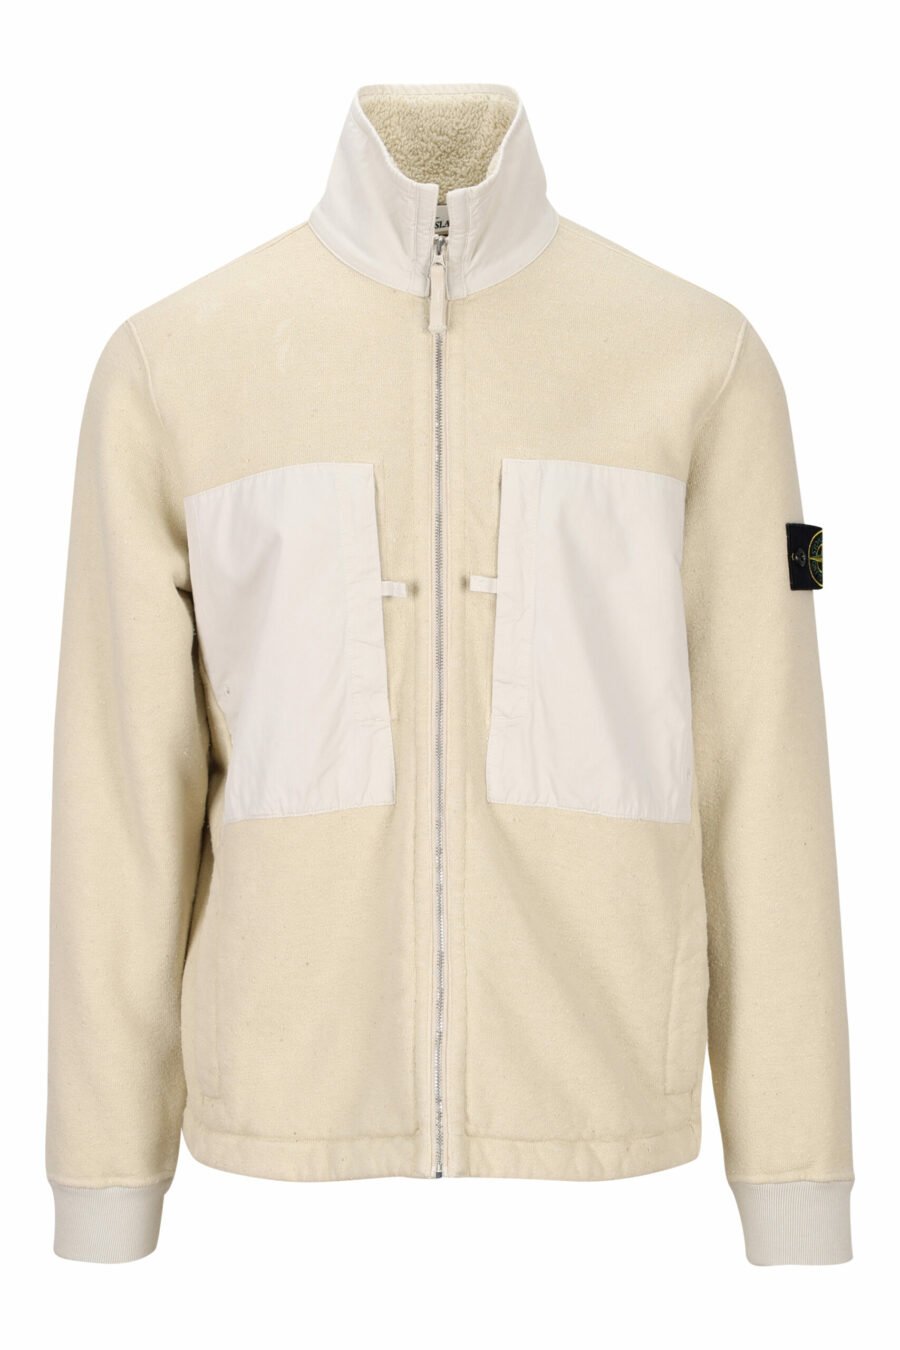 Beige mix sweatshirt with zip and fleece collar - 8052572757938 scaled